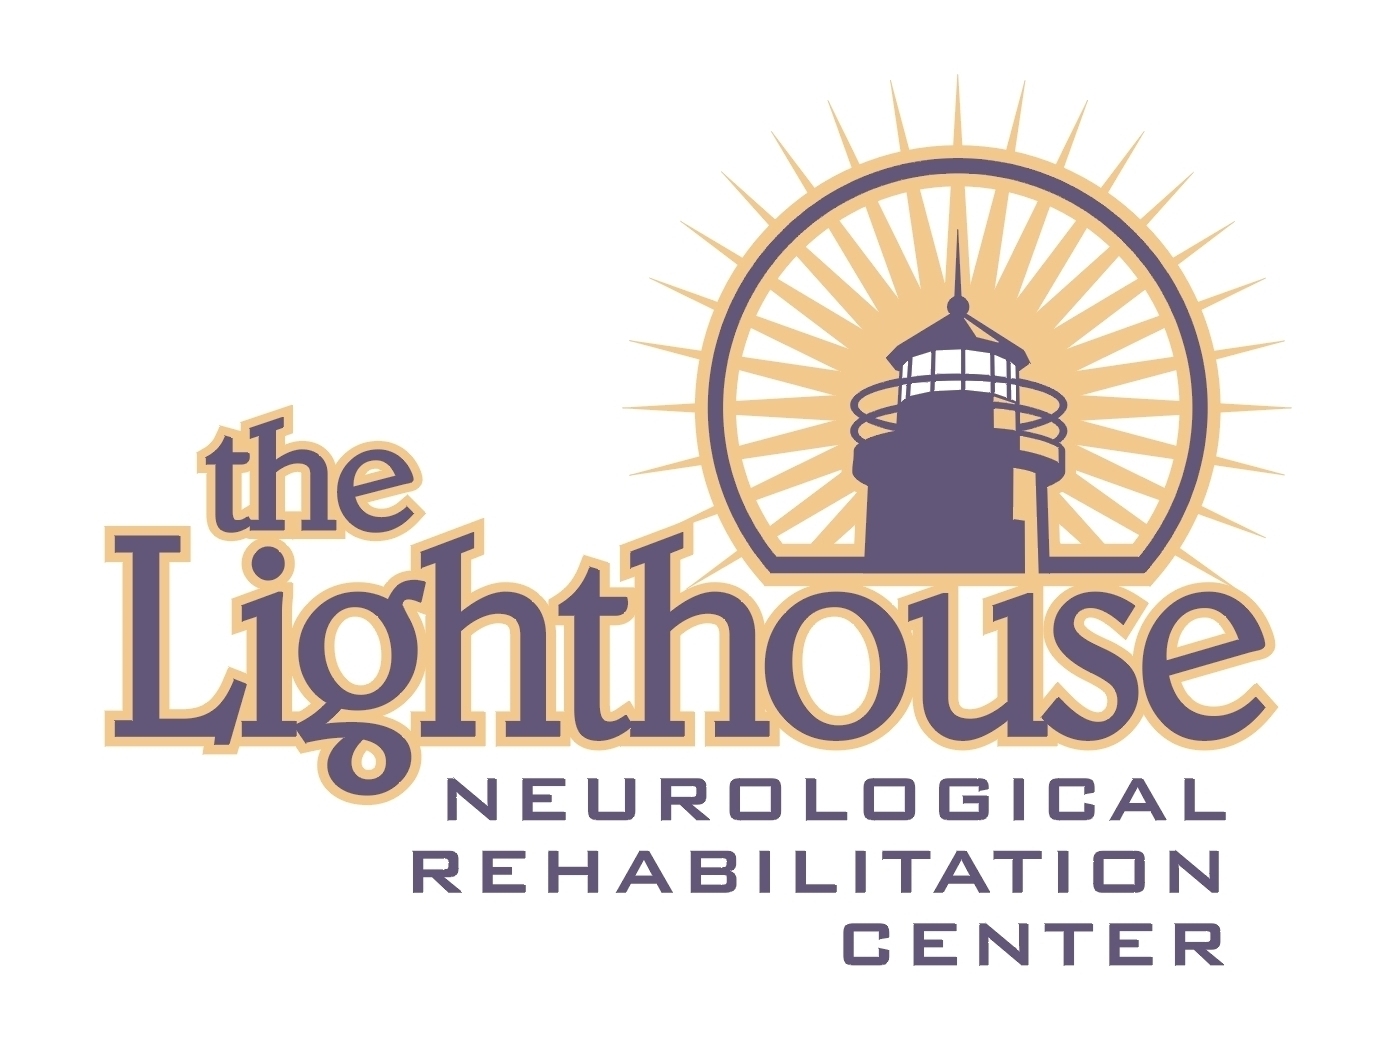 Lightouse Neurological Rehabilitation Center